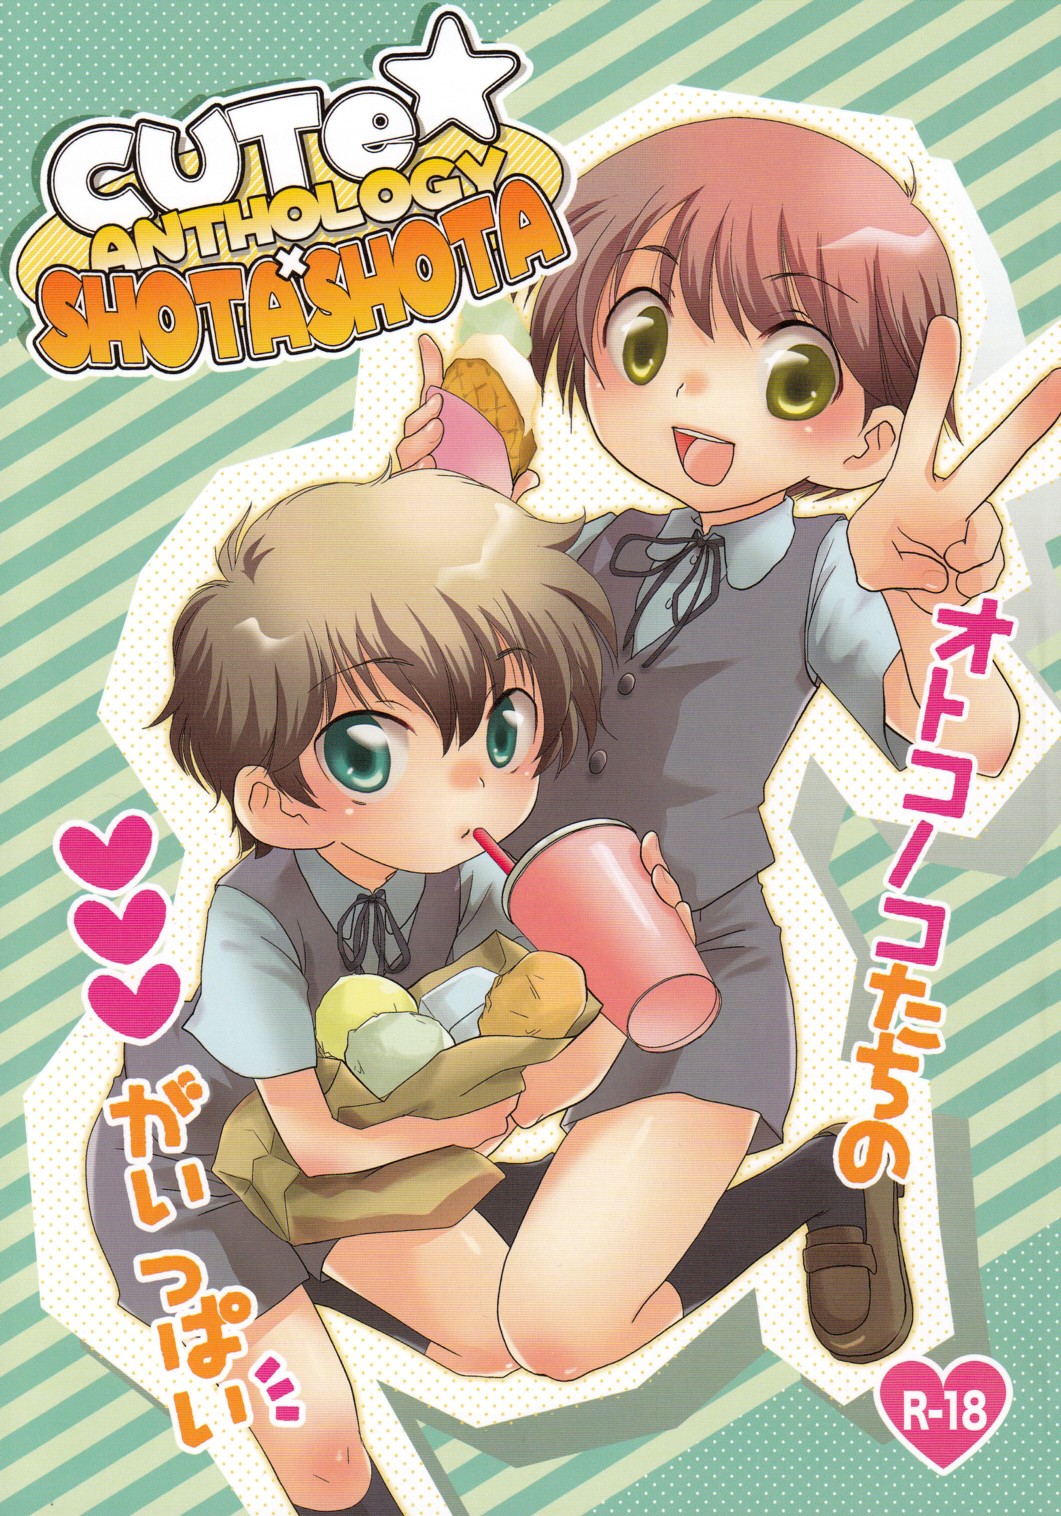 Cute Anthology Shota x Shota - Page 1 - HentaiEra